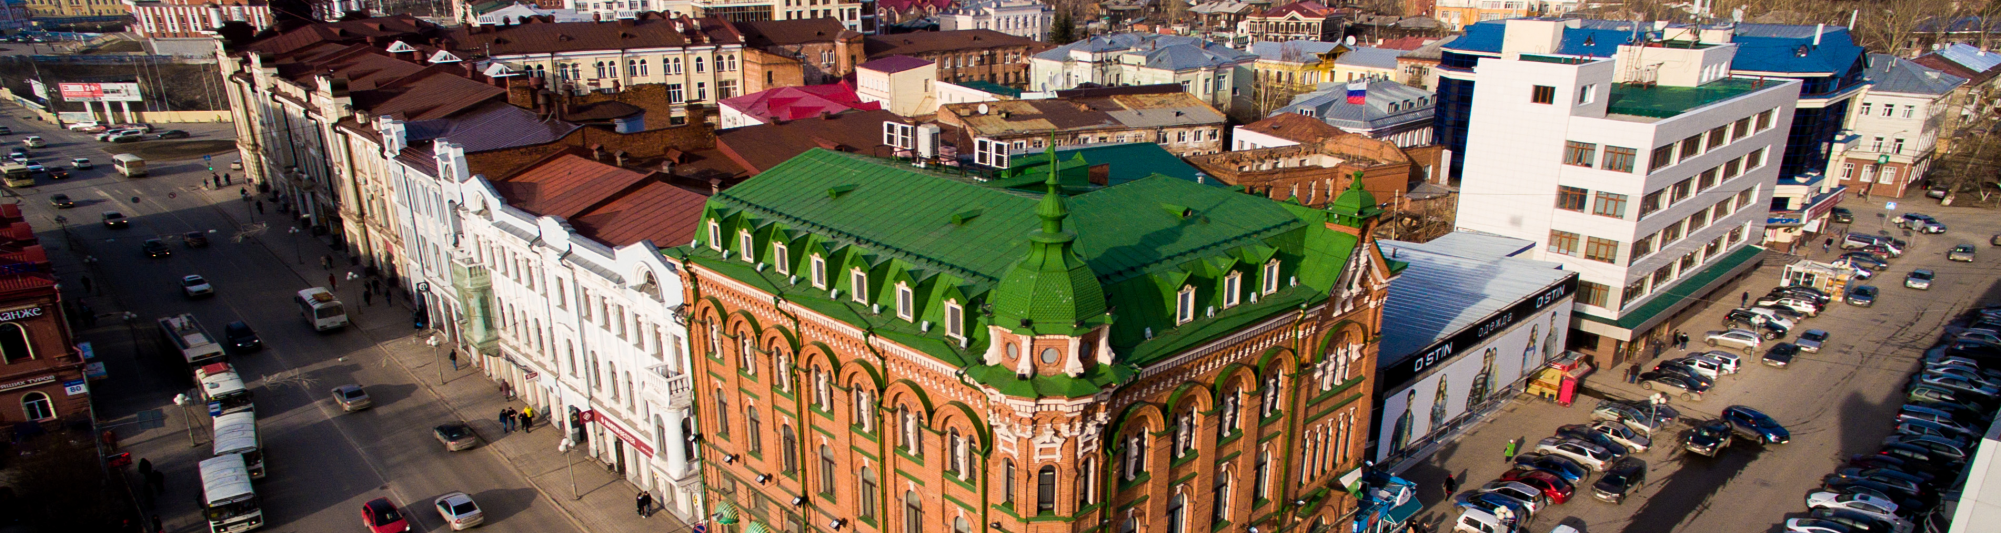 Депутаты утвердили бюджет Томска на 2019 год